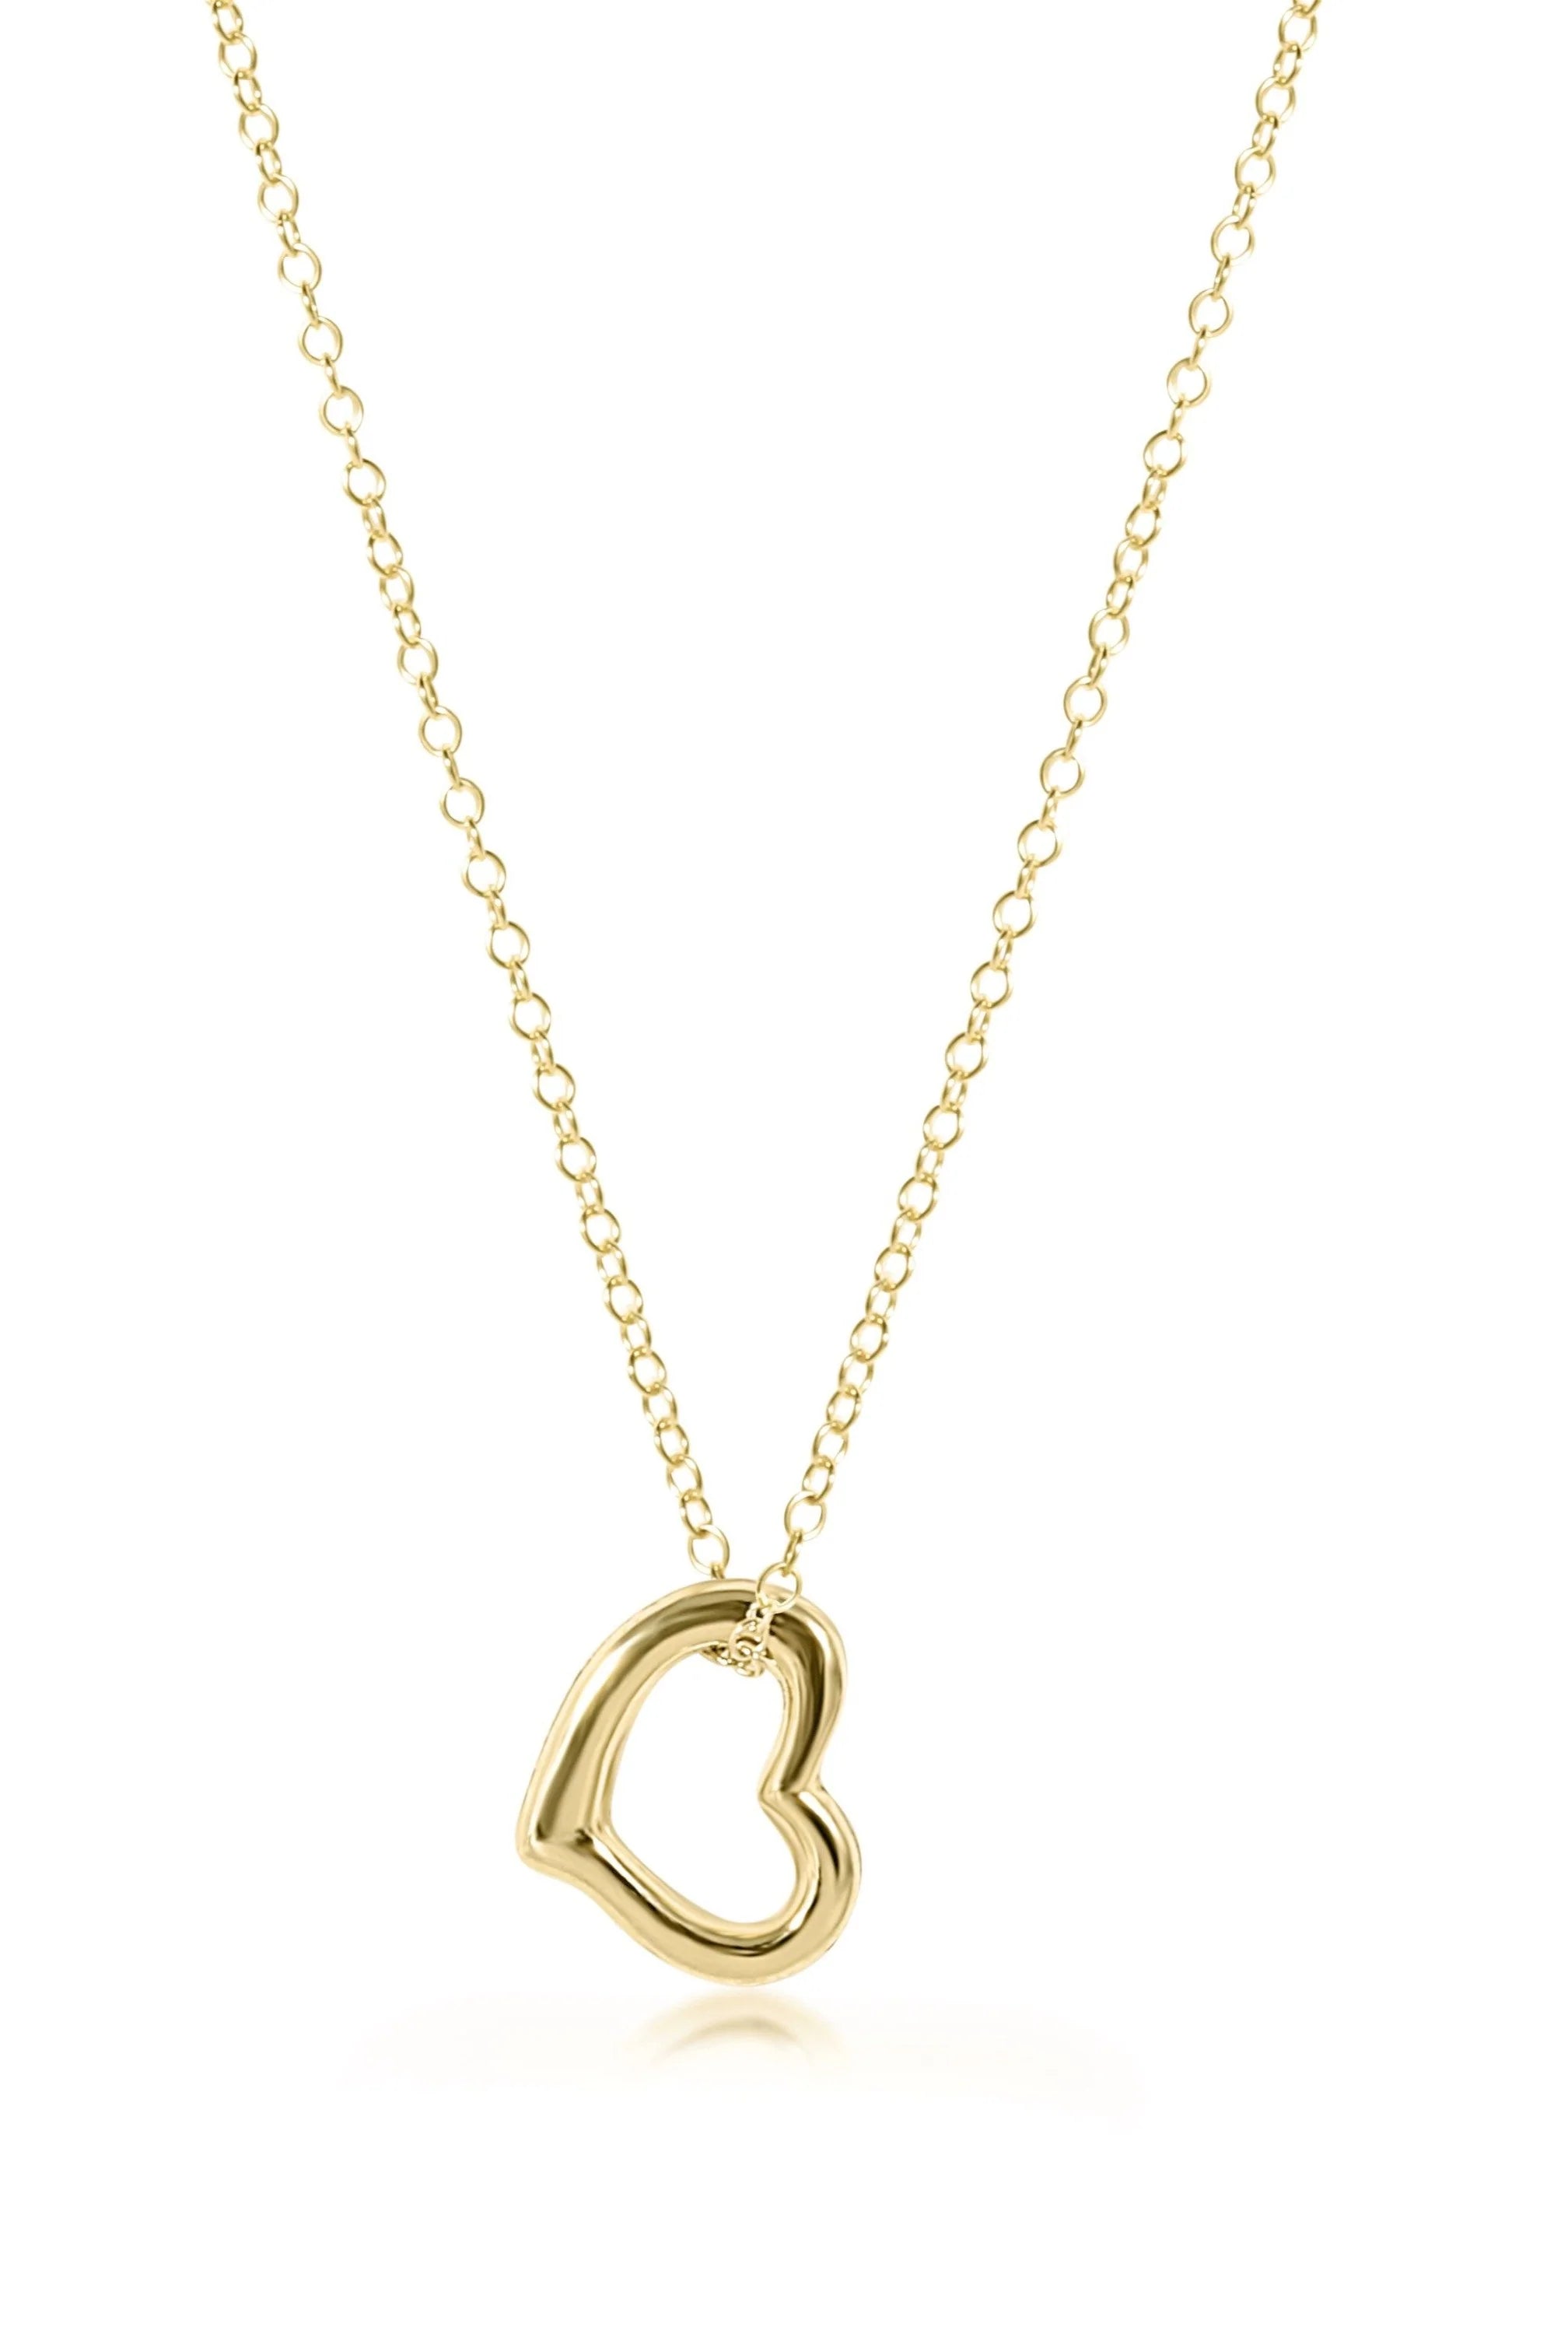 Egirl 14’ Gold Heart Charm Necklace Lg Heart-Necklaces-eNewton-The Lovely Closet, Women's Fashion Boutique in Alexandria, KY